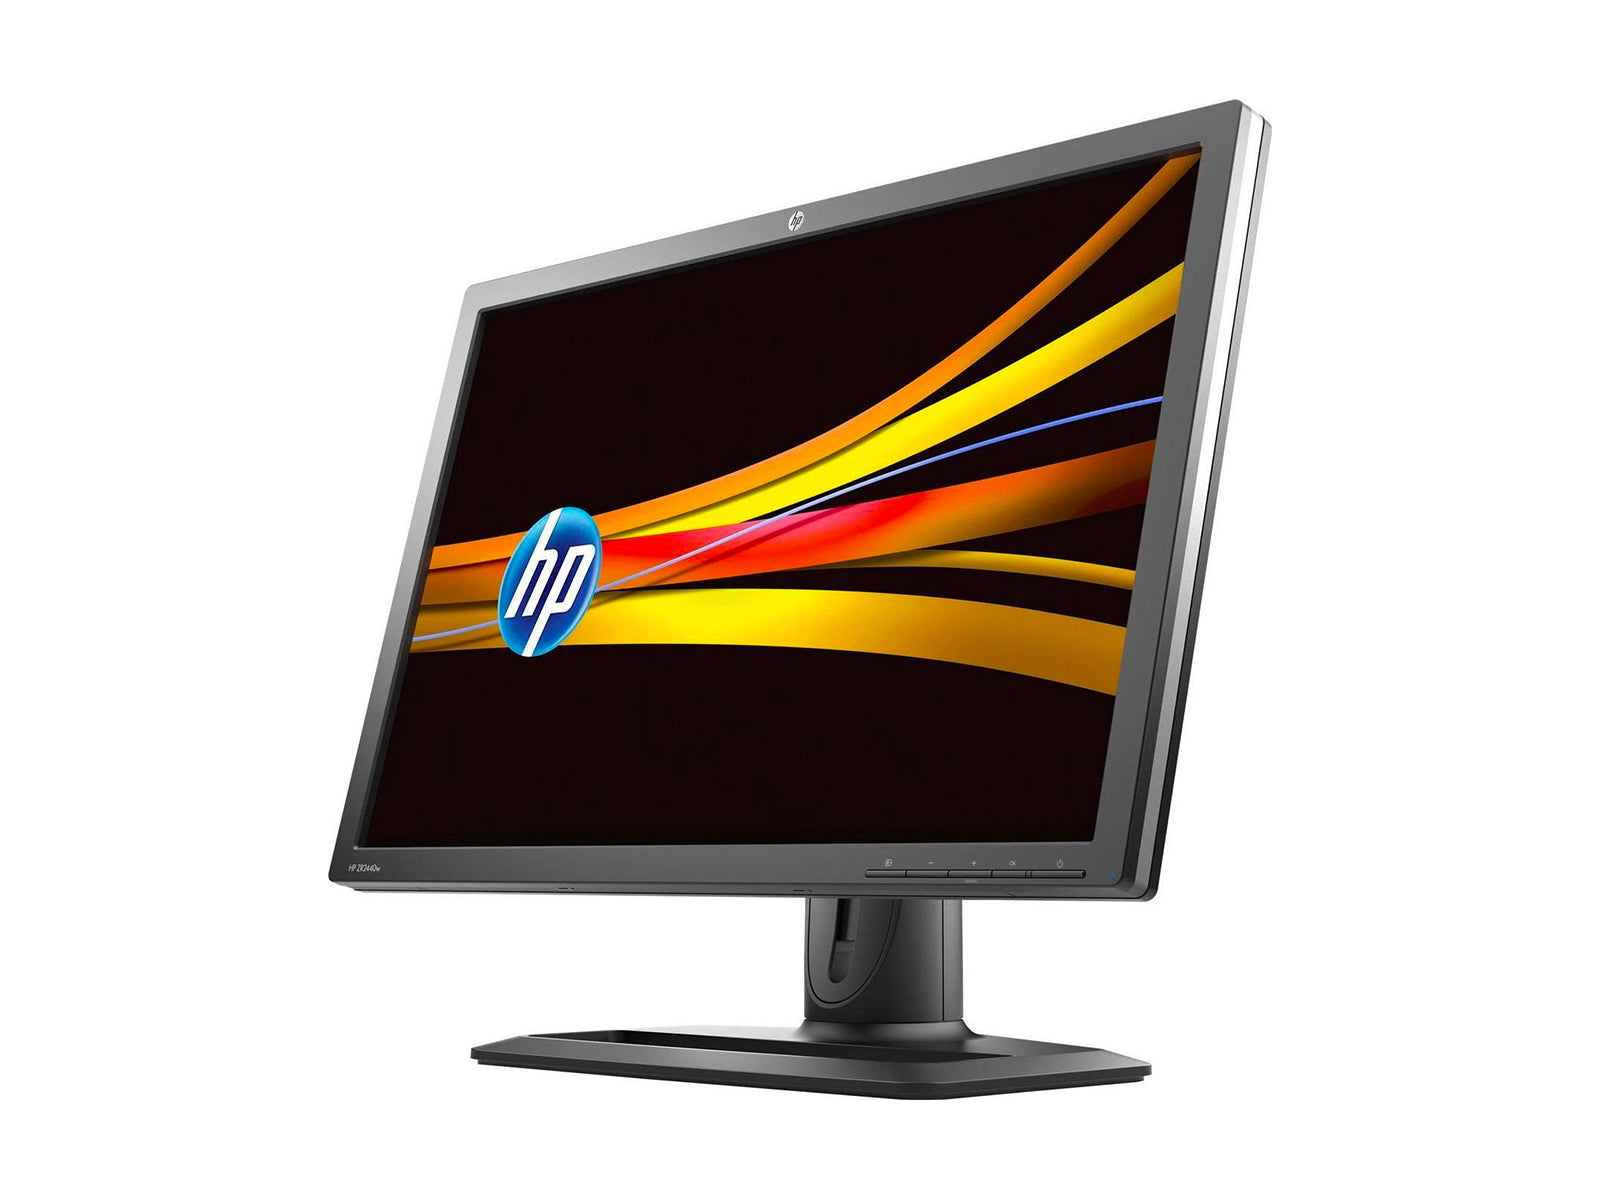 HP ZR2440w 24" WUXGA 1920x1200 LED-Display-Monitor (XW477A4#ABA) Monitors.com